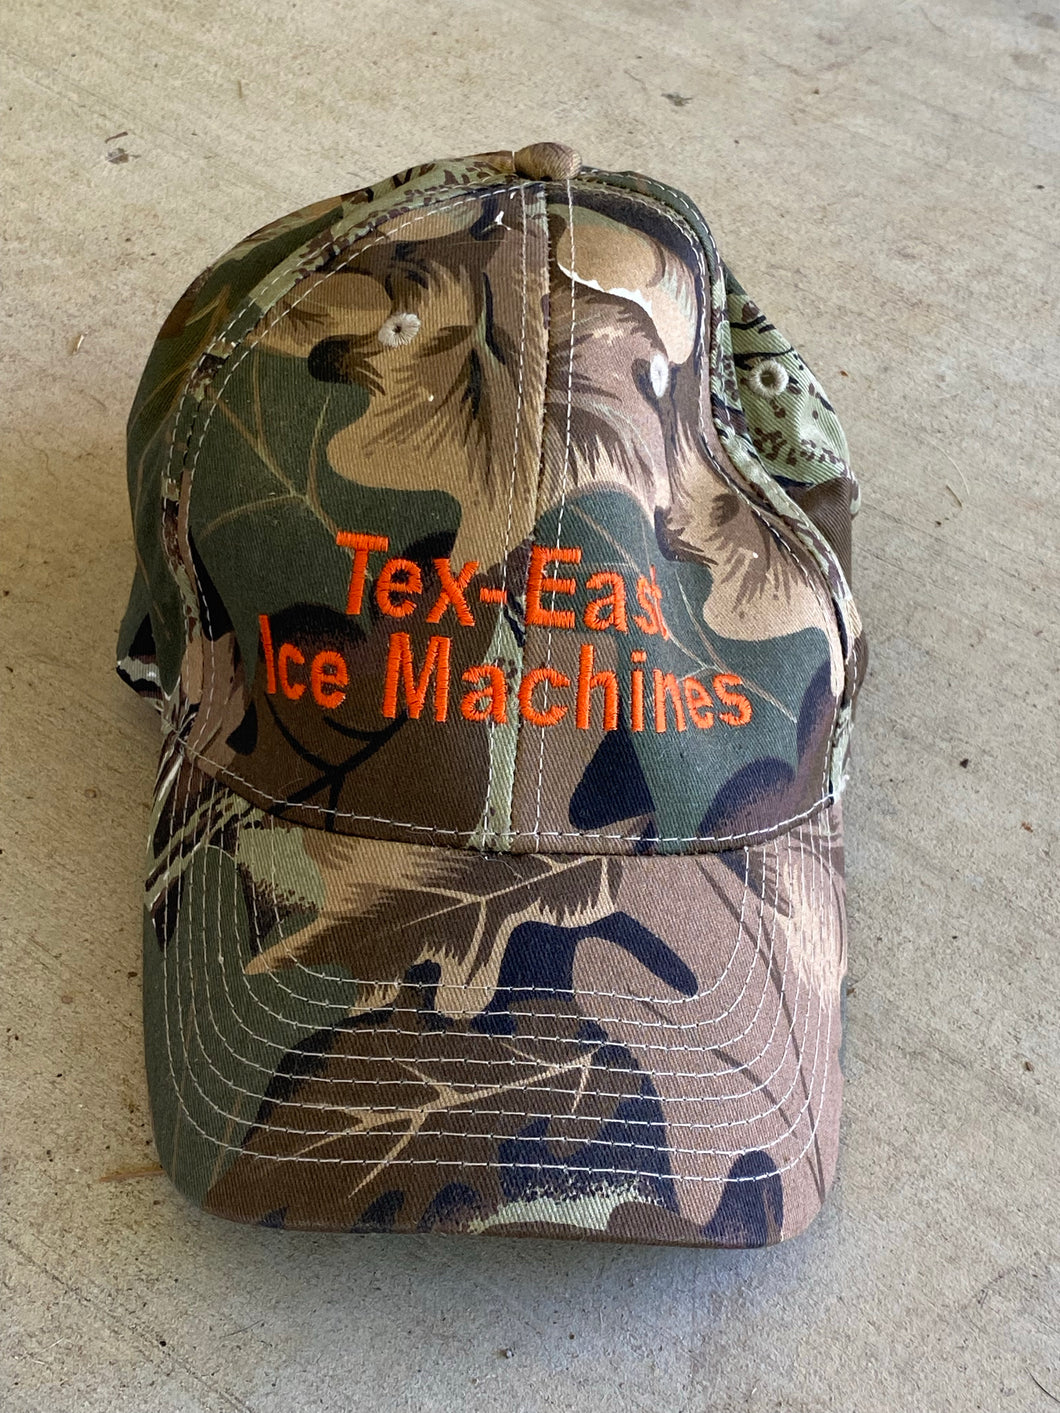 Texas-East Ice Machines Snapback